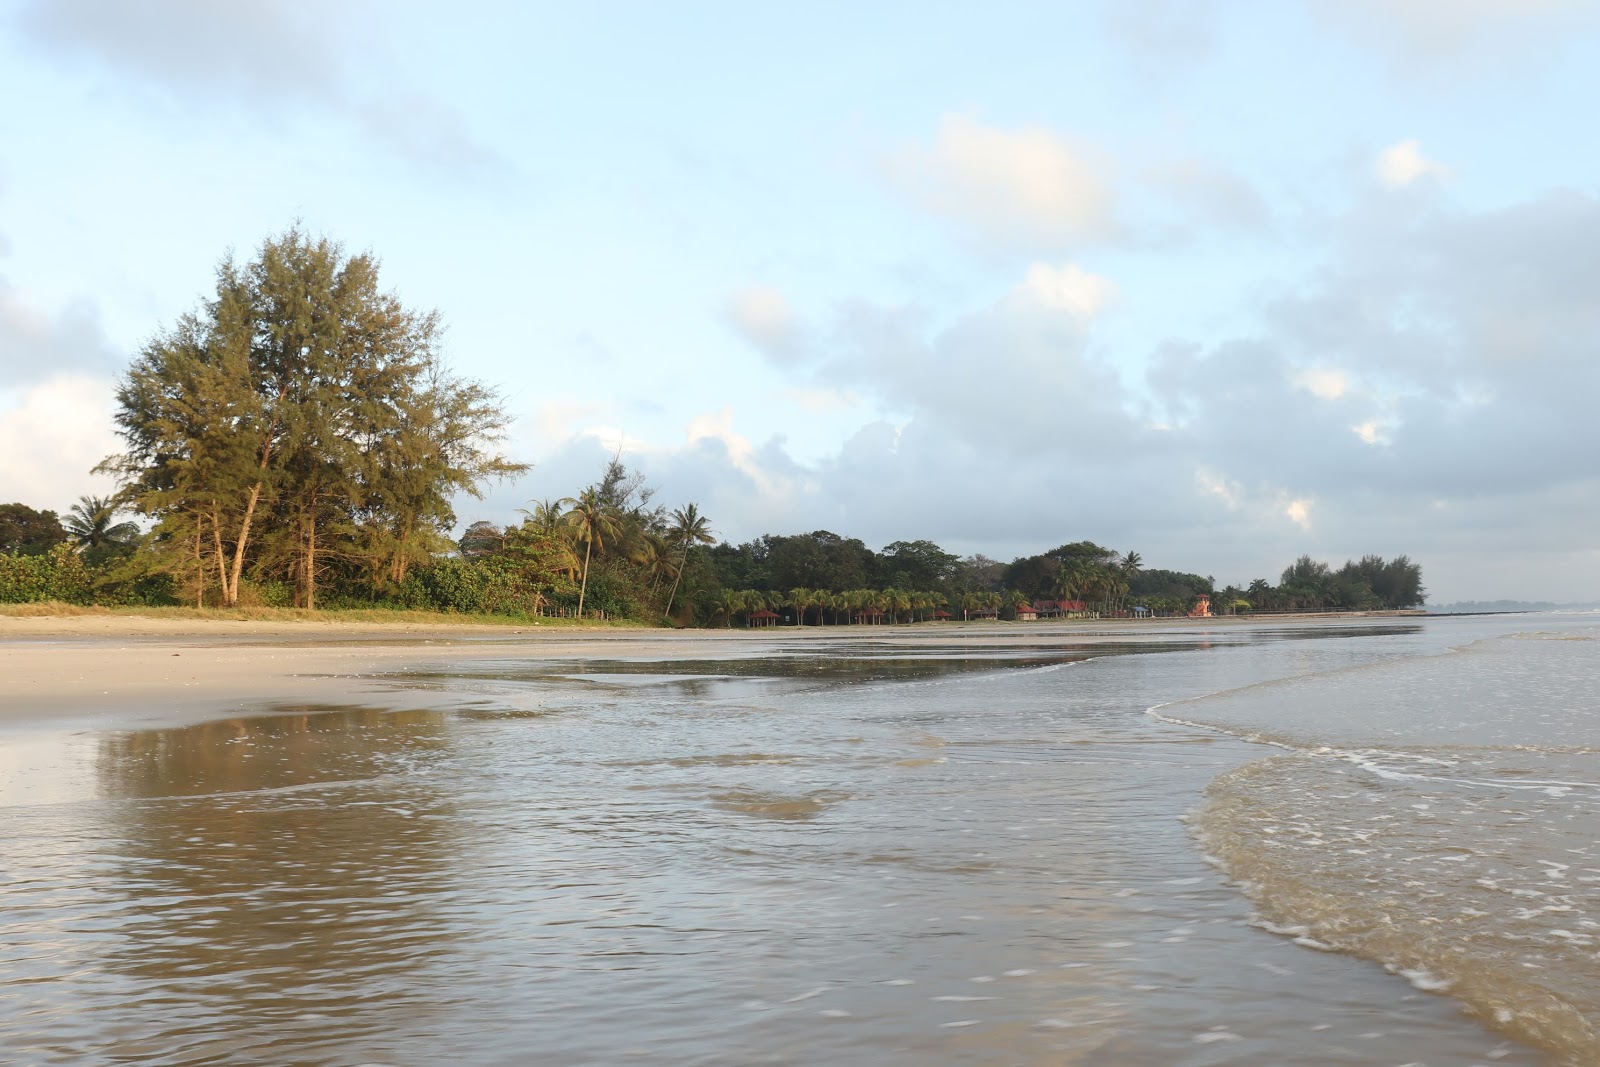 Fotografie cu Beserah Beach - locul popular printre cunoscătorii de relaxare